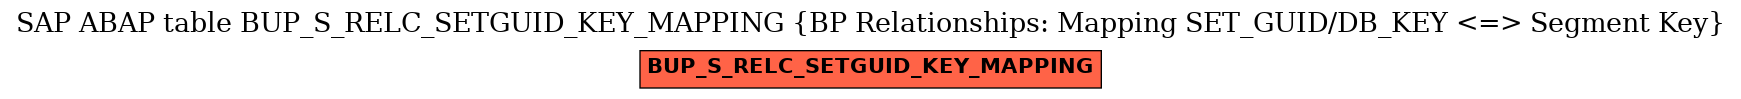 E-R Diagram for table BUP_S_RELC_SETGUID_KEY_MAPPING (BP Relationships: Mapping SET_GUID/DB_KEY <=> Segment Key)